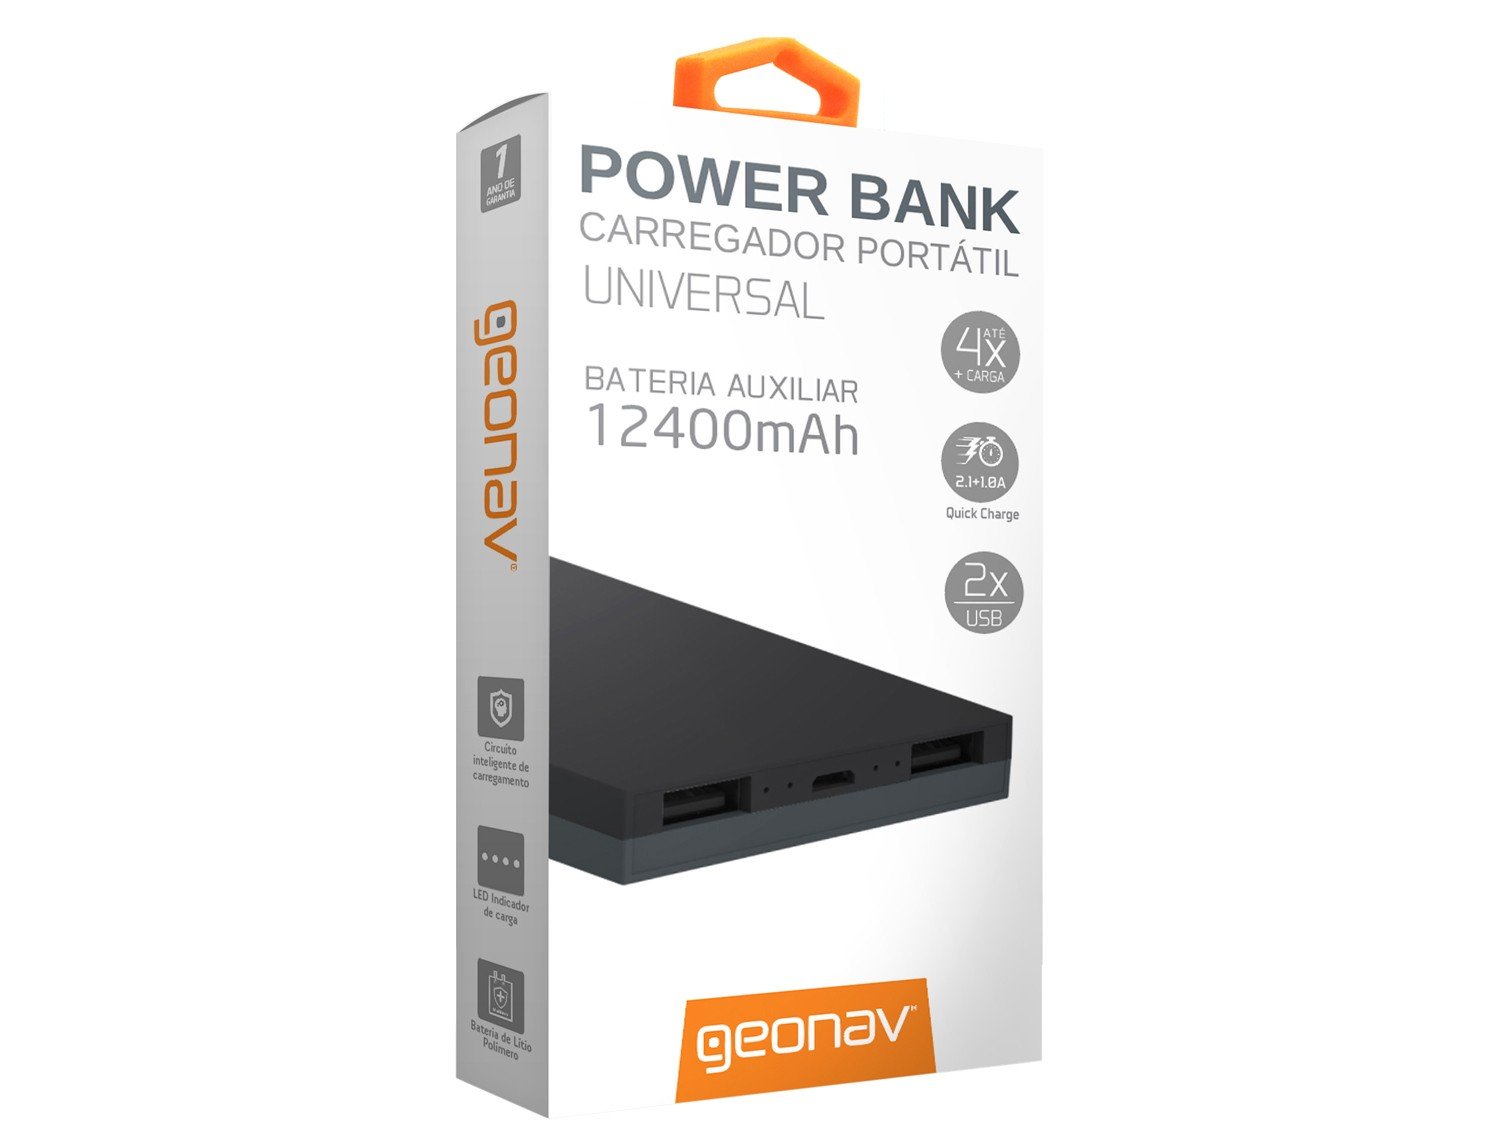 Carregador Portátil Universal12400mAh USB Geonav - Power Bank - 3